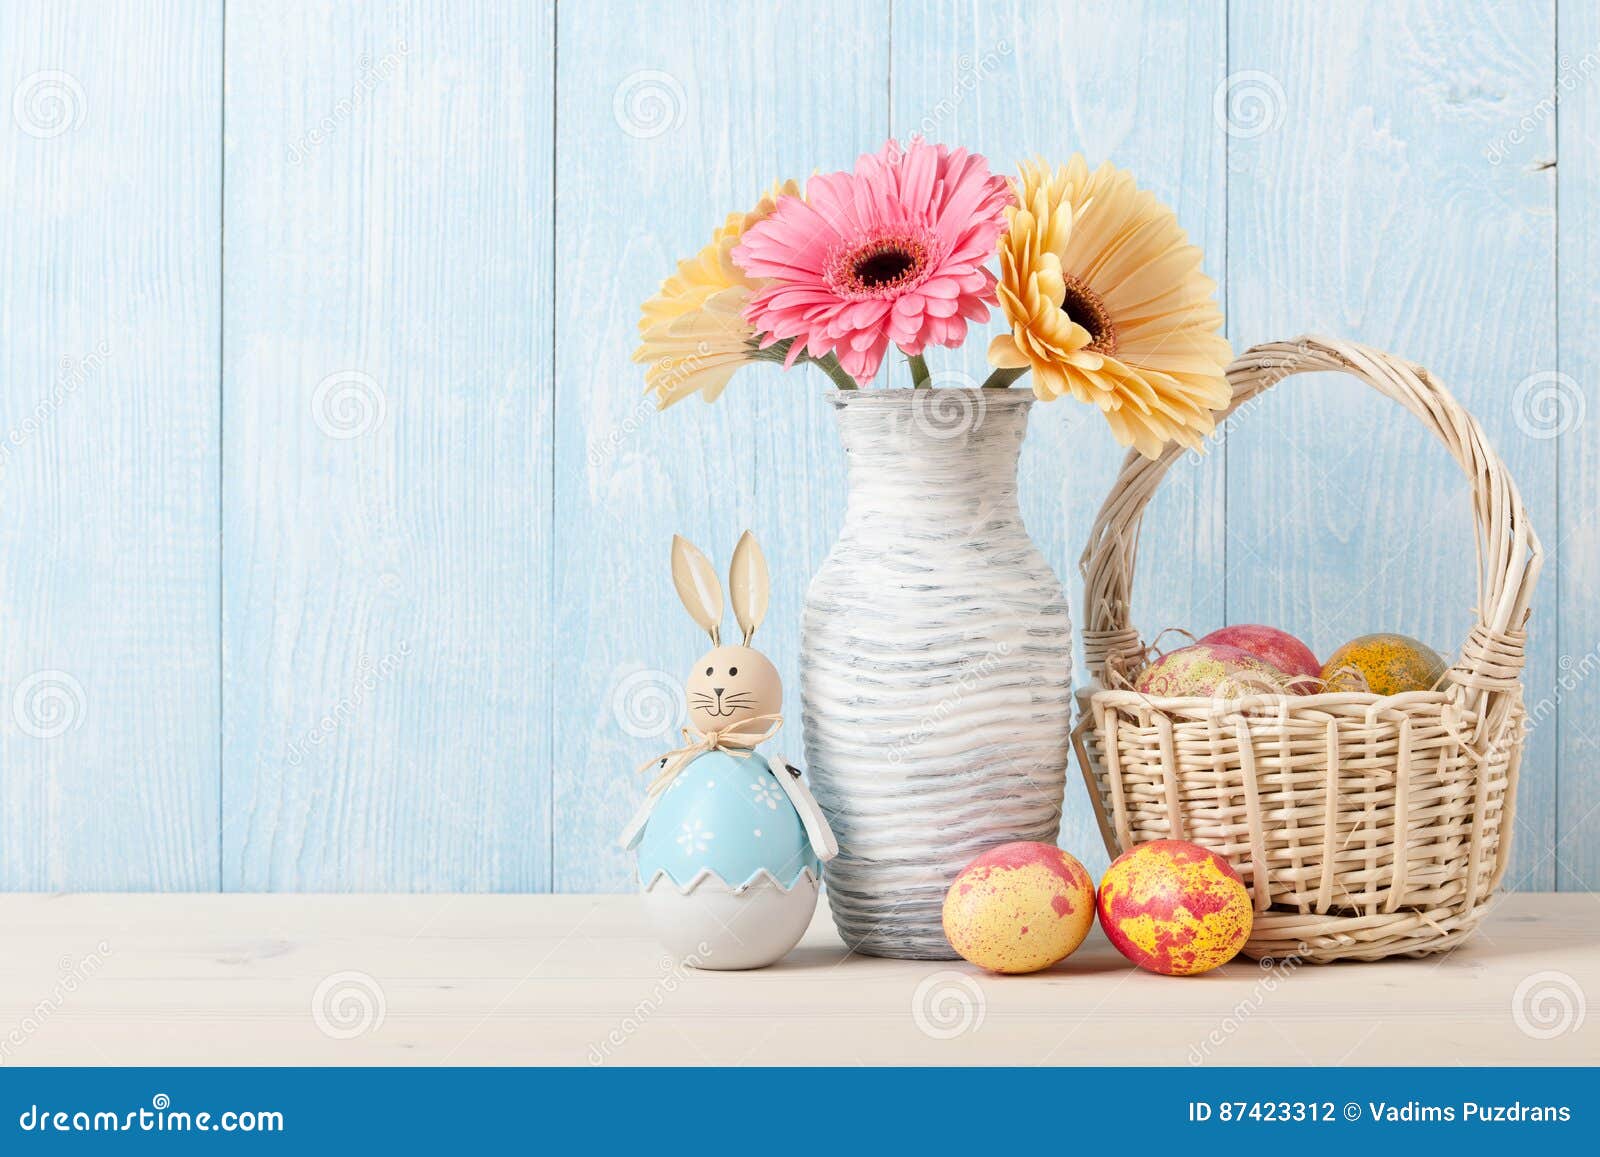 Easter decoration stock photo. Image of empty, happy - 87423312